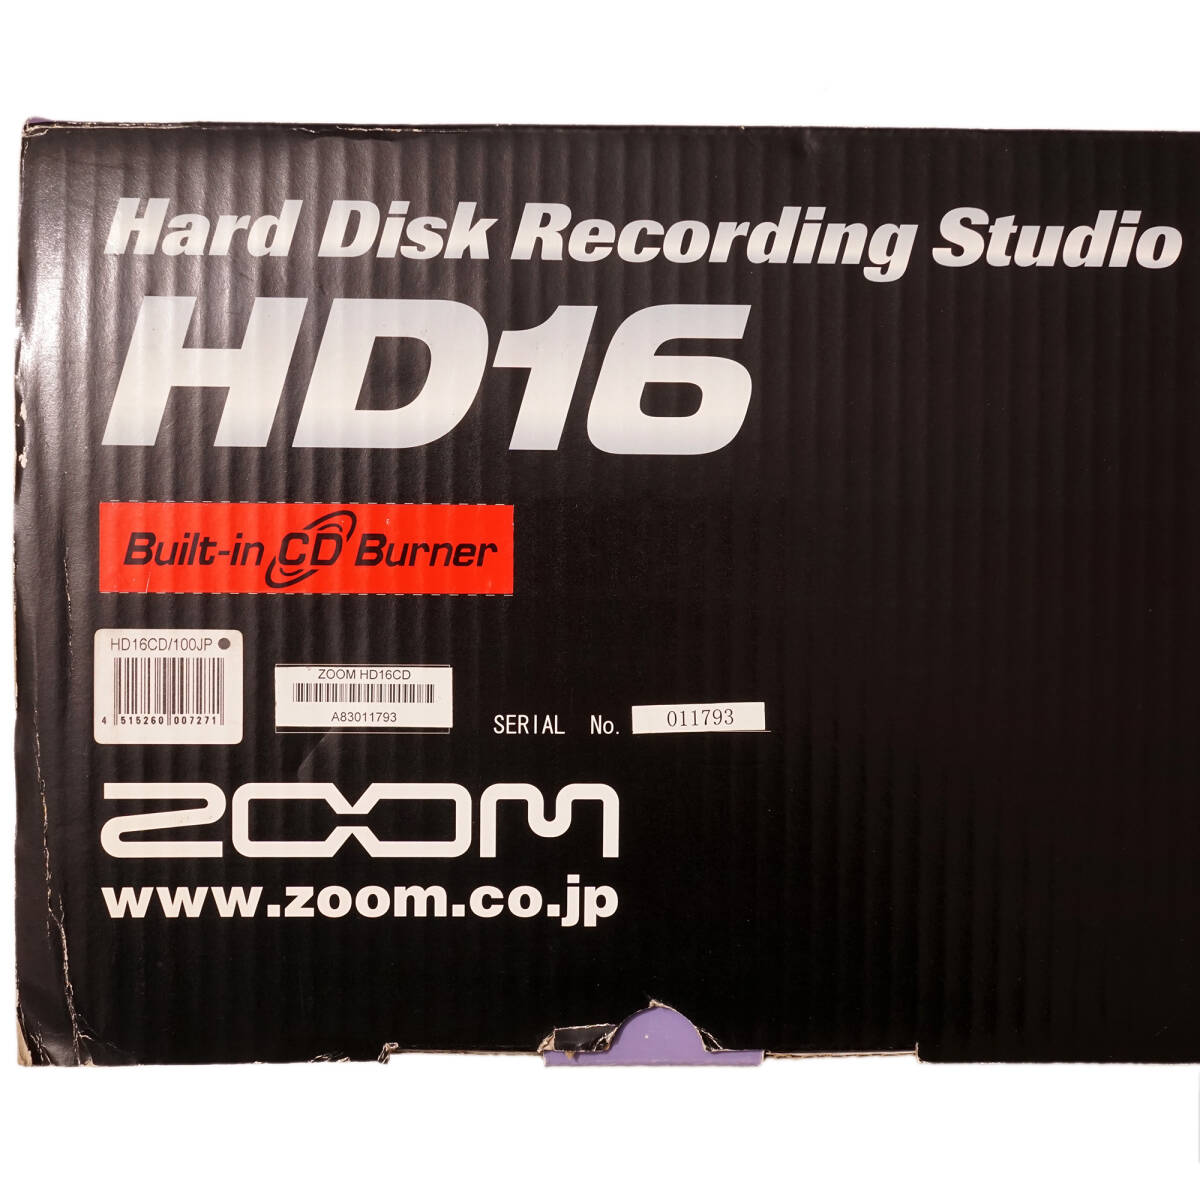 ZOOM HD16 CD Hard Disk Recording Studio zoom HDD hard disk recording Studio PC ream .MTR multitrack recorder 